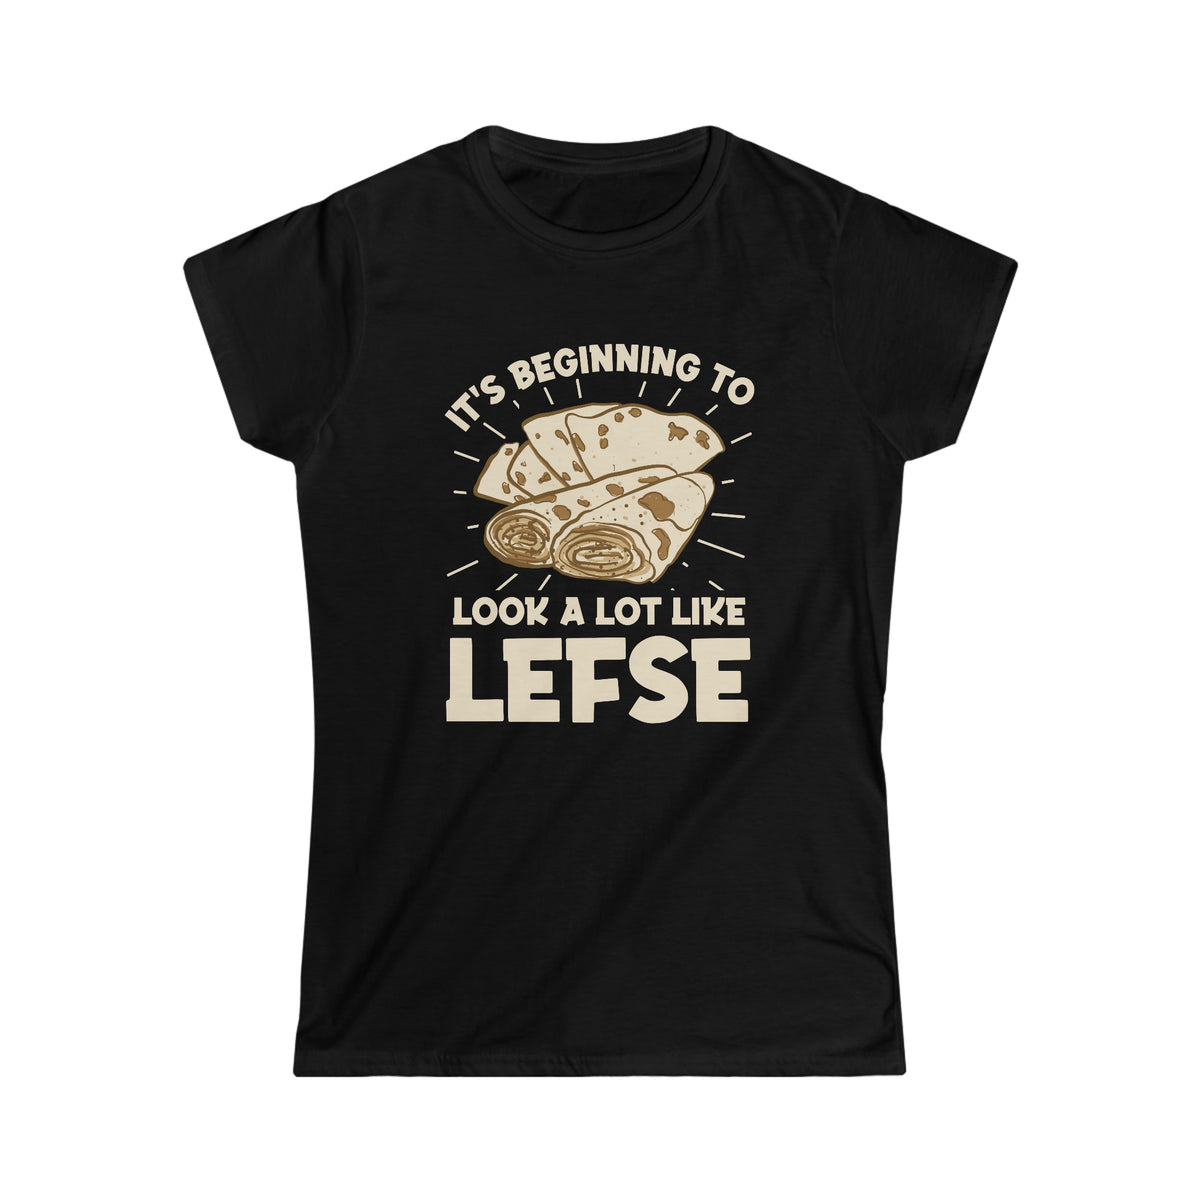 Norwegian Lefse Funny Holiday Baking Shirt | Nordic Baker Gift | Women's Softstyle Tee